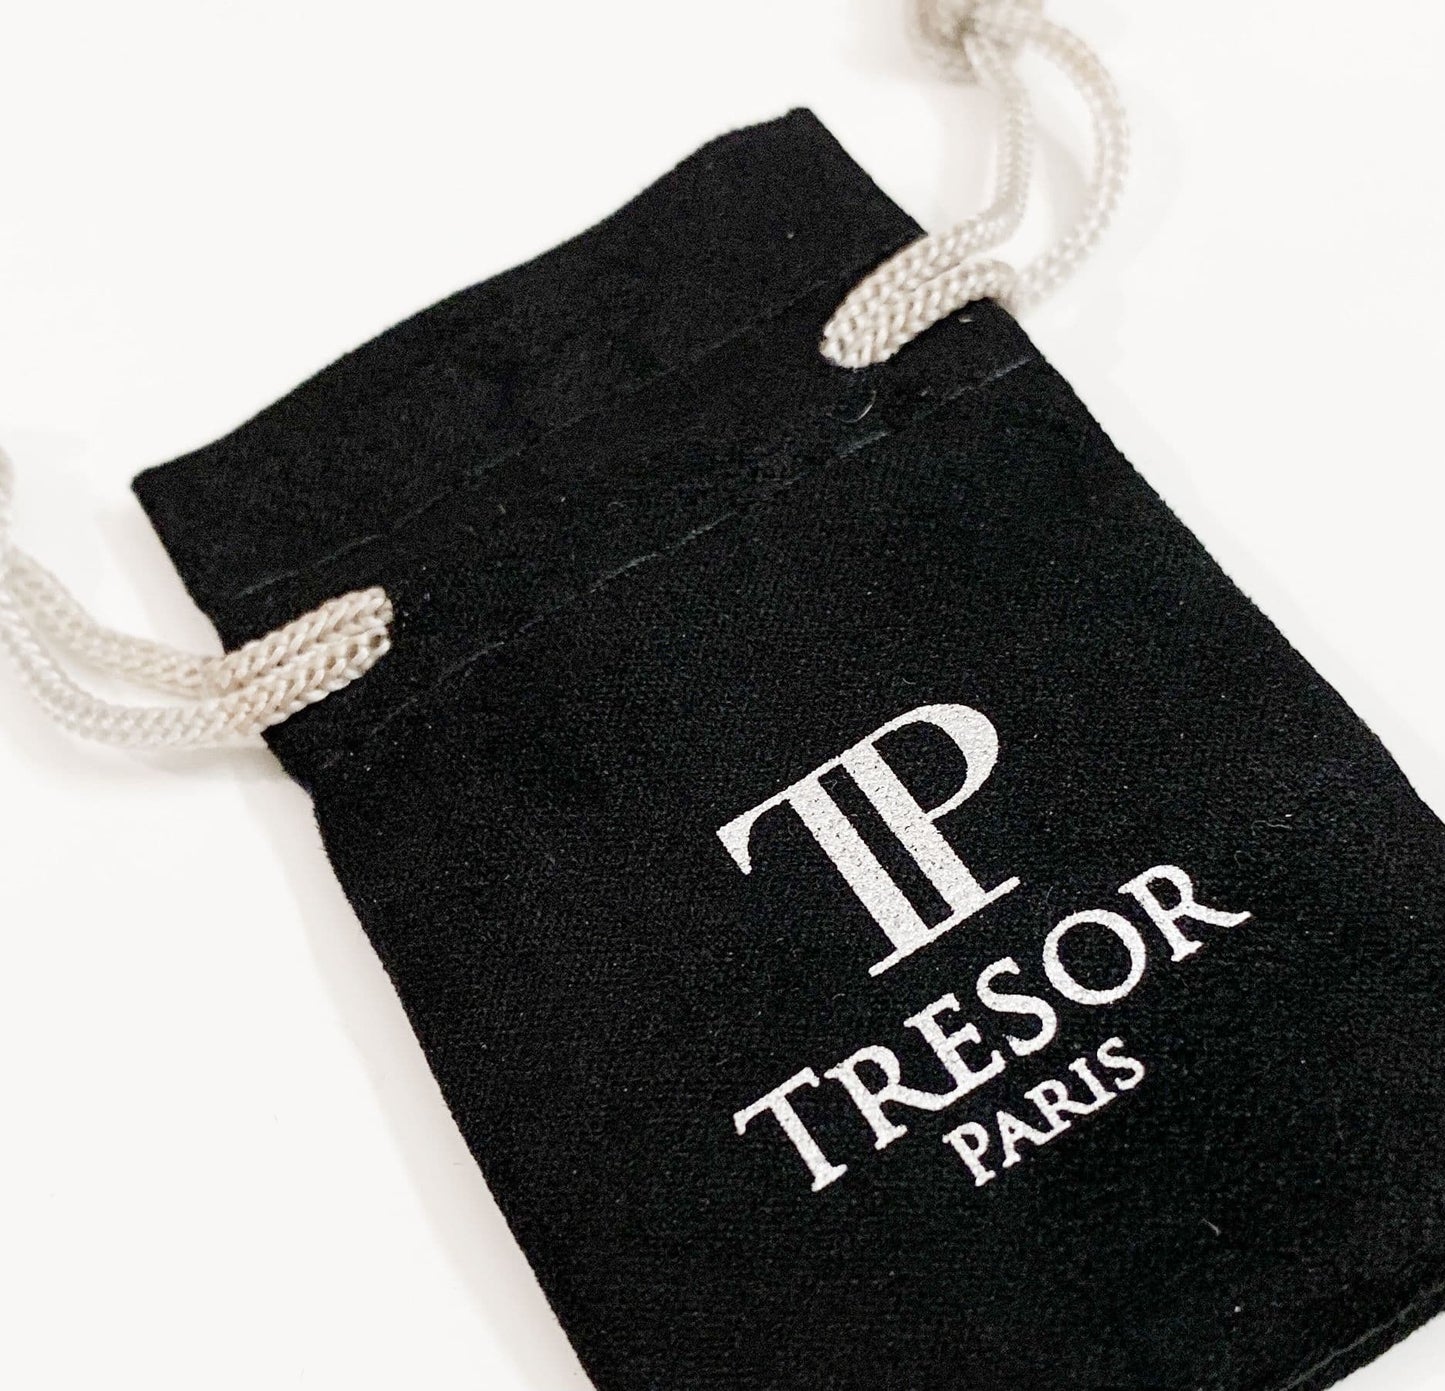 Tresor Paris light blue heart shaped 10 mm stud earrings titanium